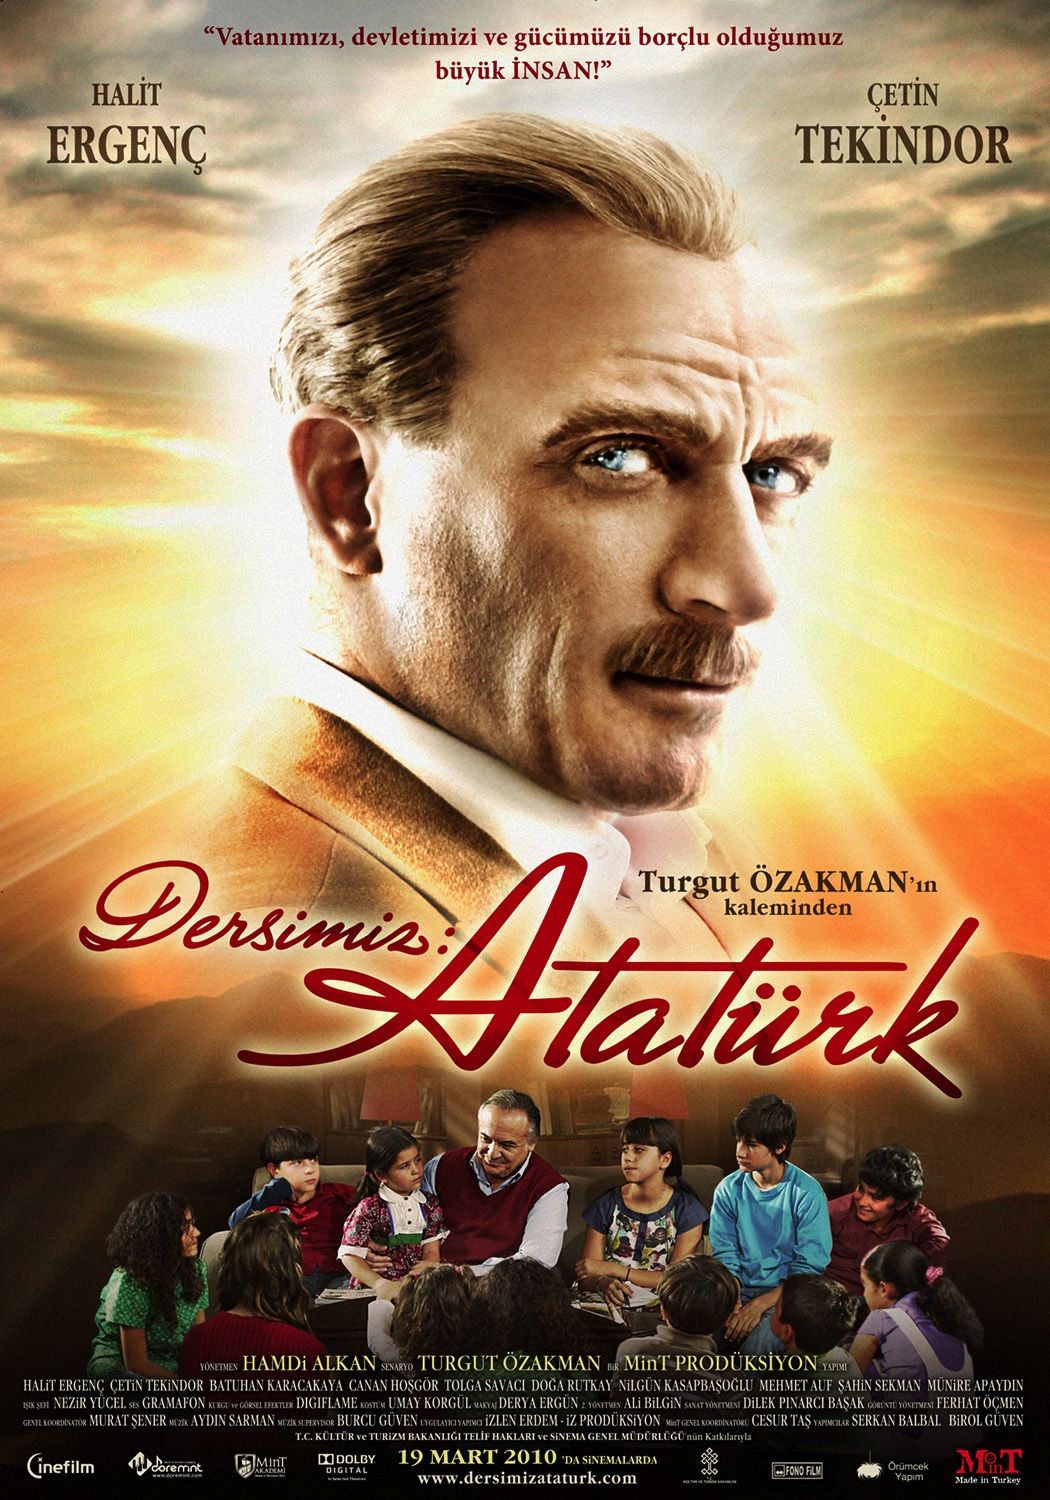 Extra Large Movie Poster Image for Dersimiz: Ataturk (#1 of 3)